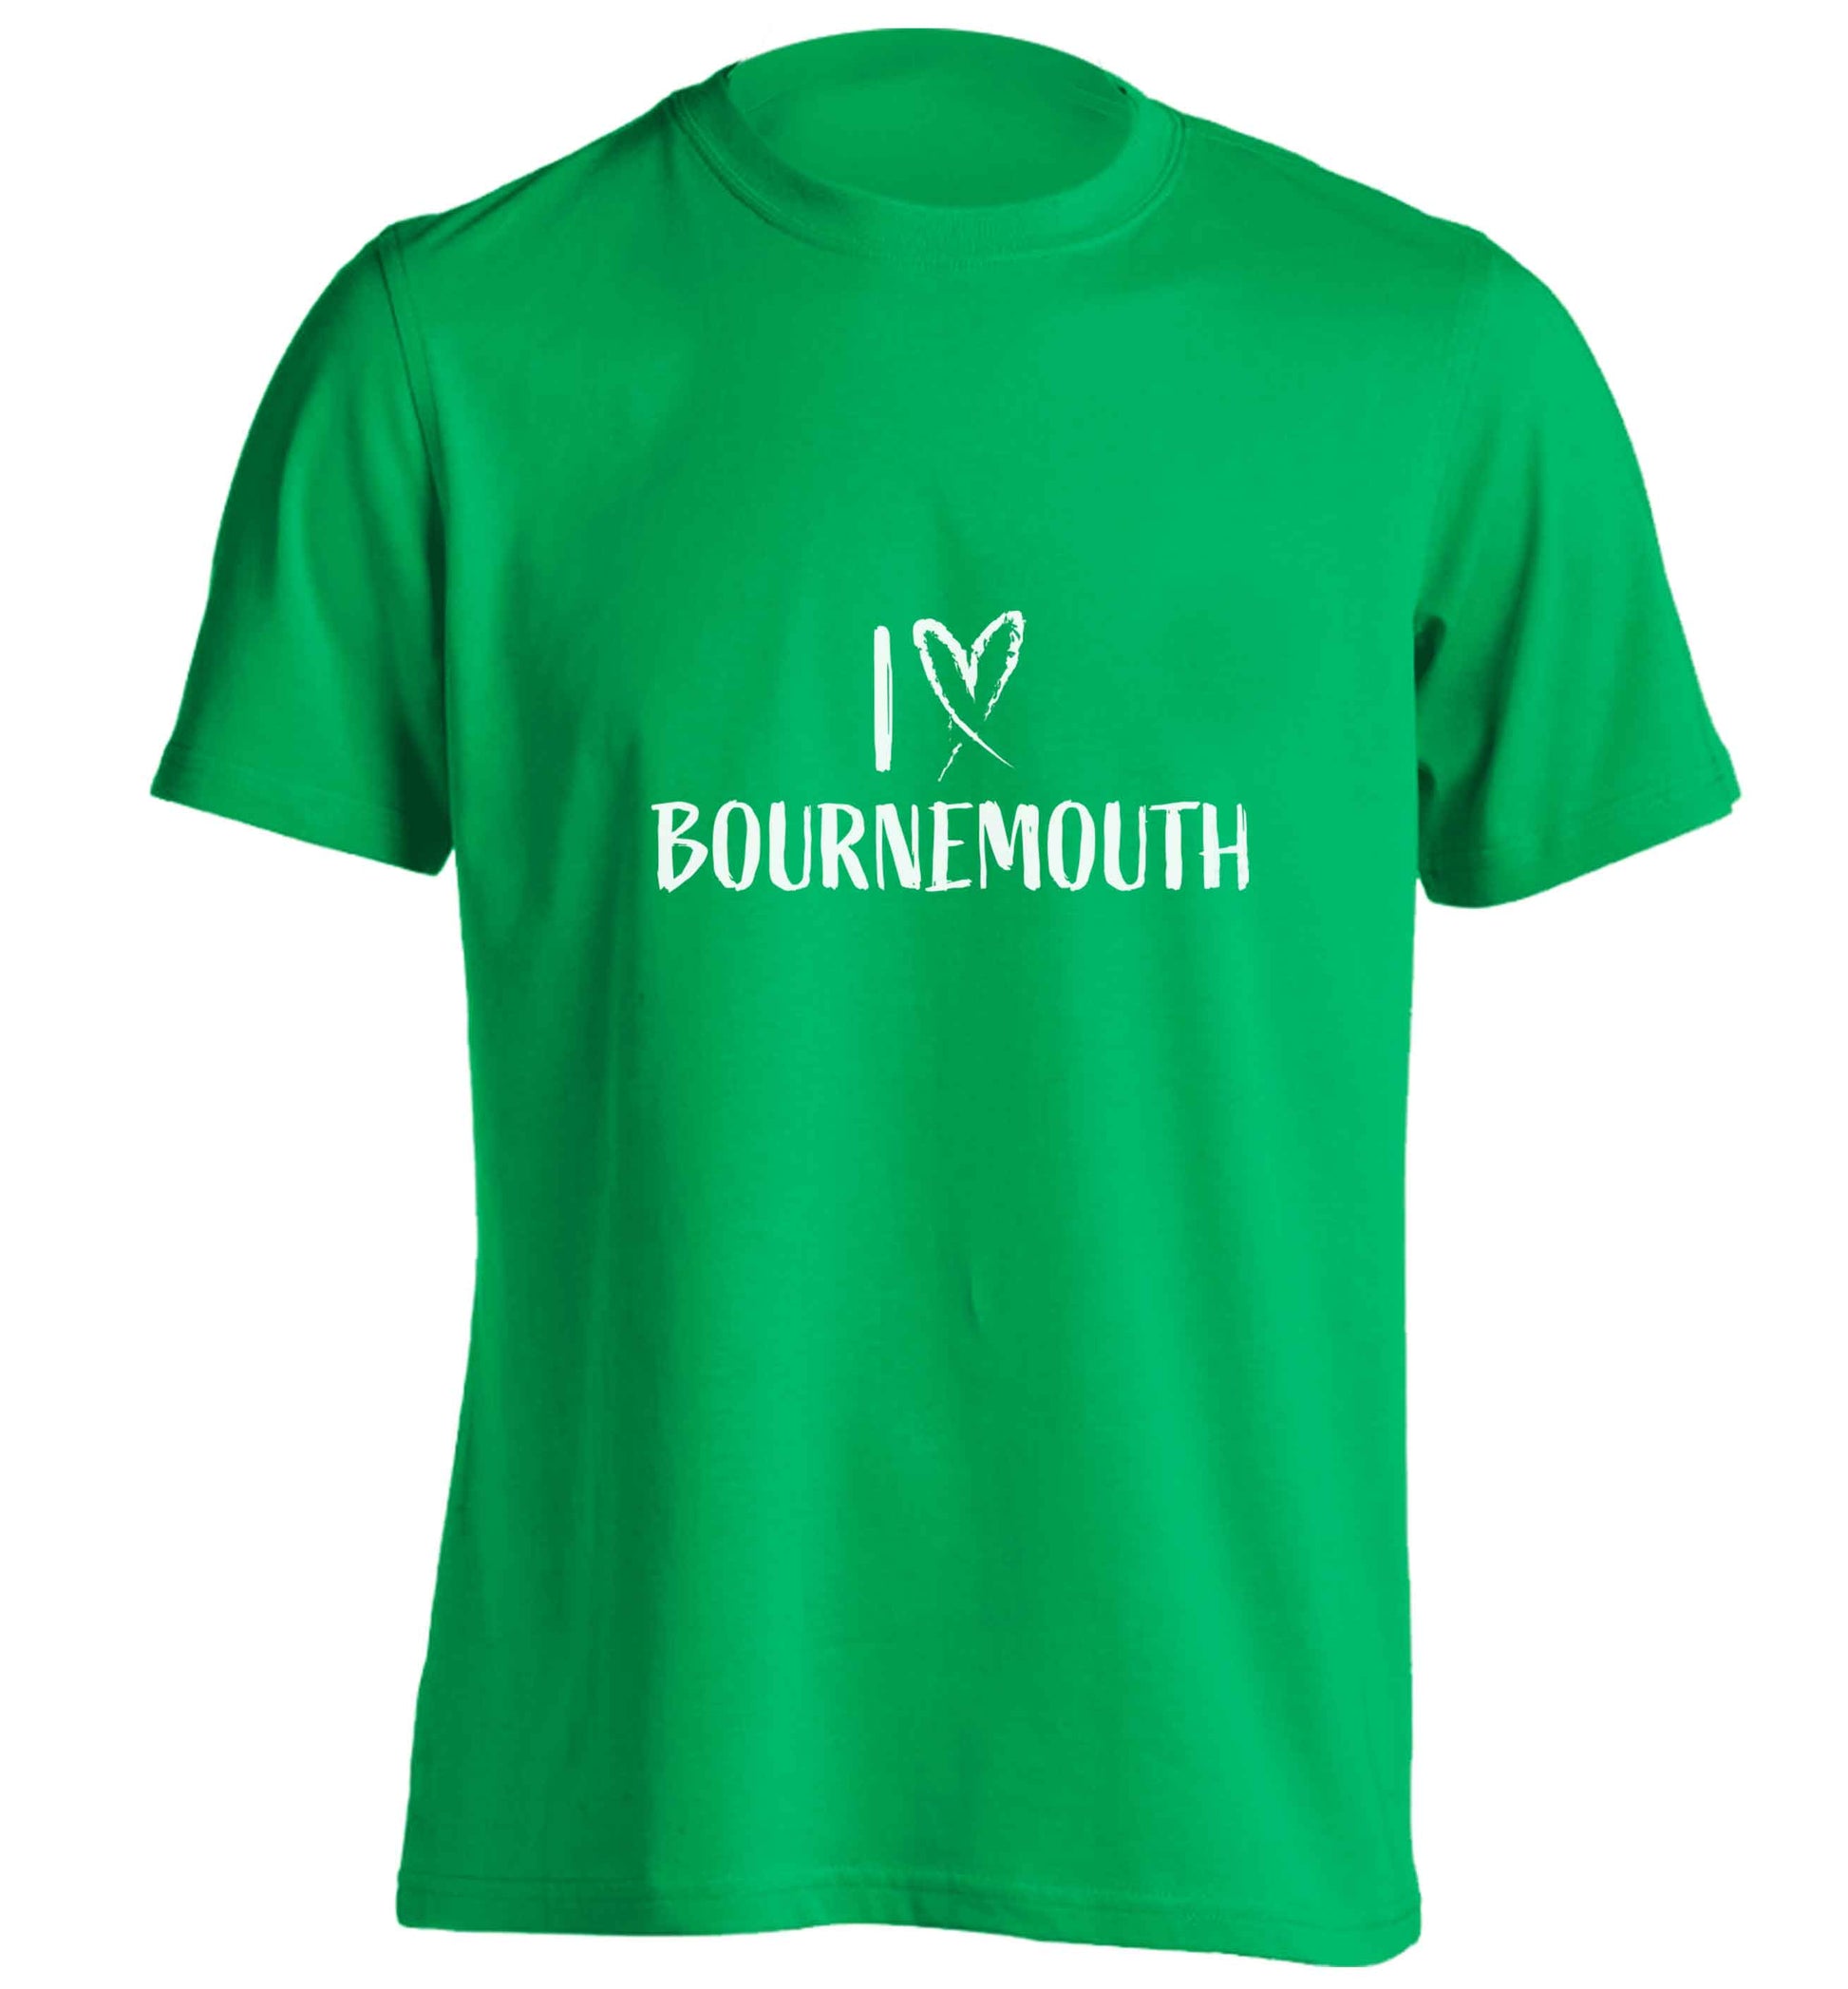 I love Bournemouth adults unisex green Tshirt 2XL